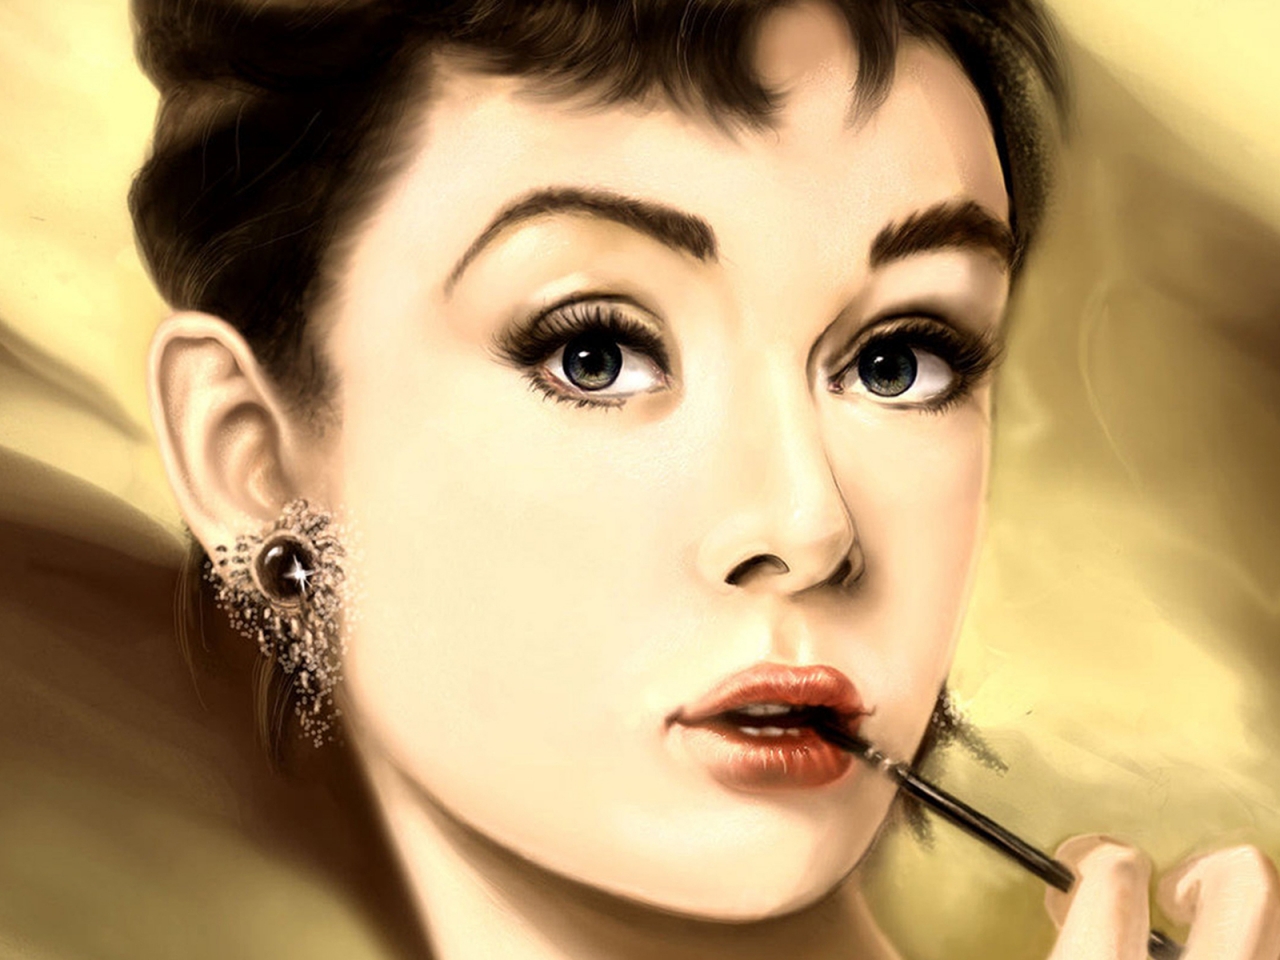 Audrey Hepburn Portrait Painting for 1280 x 960 resolution